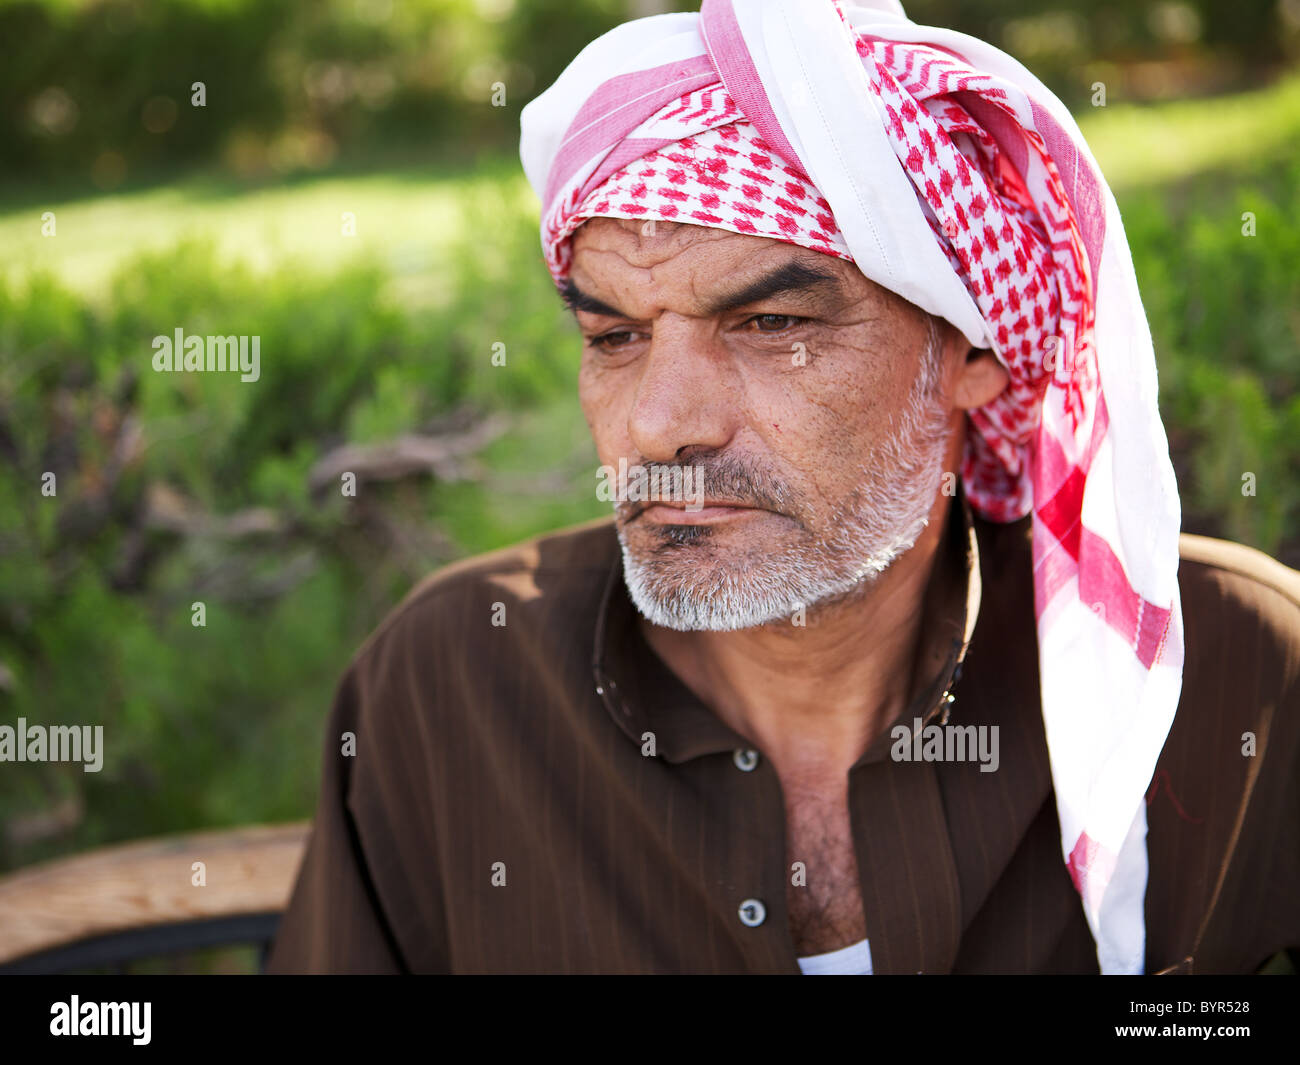 Portrait of Syrian man in traditional headscarf, Hama, Syria Stock Photo